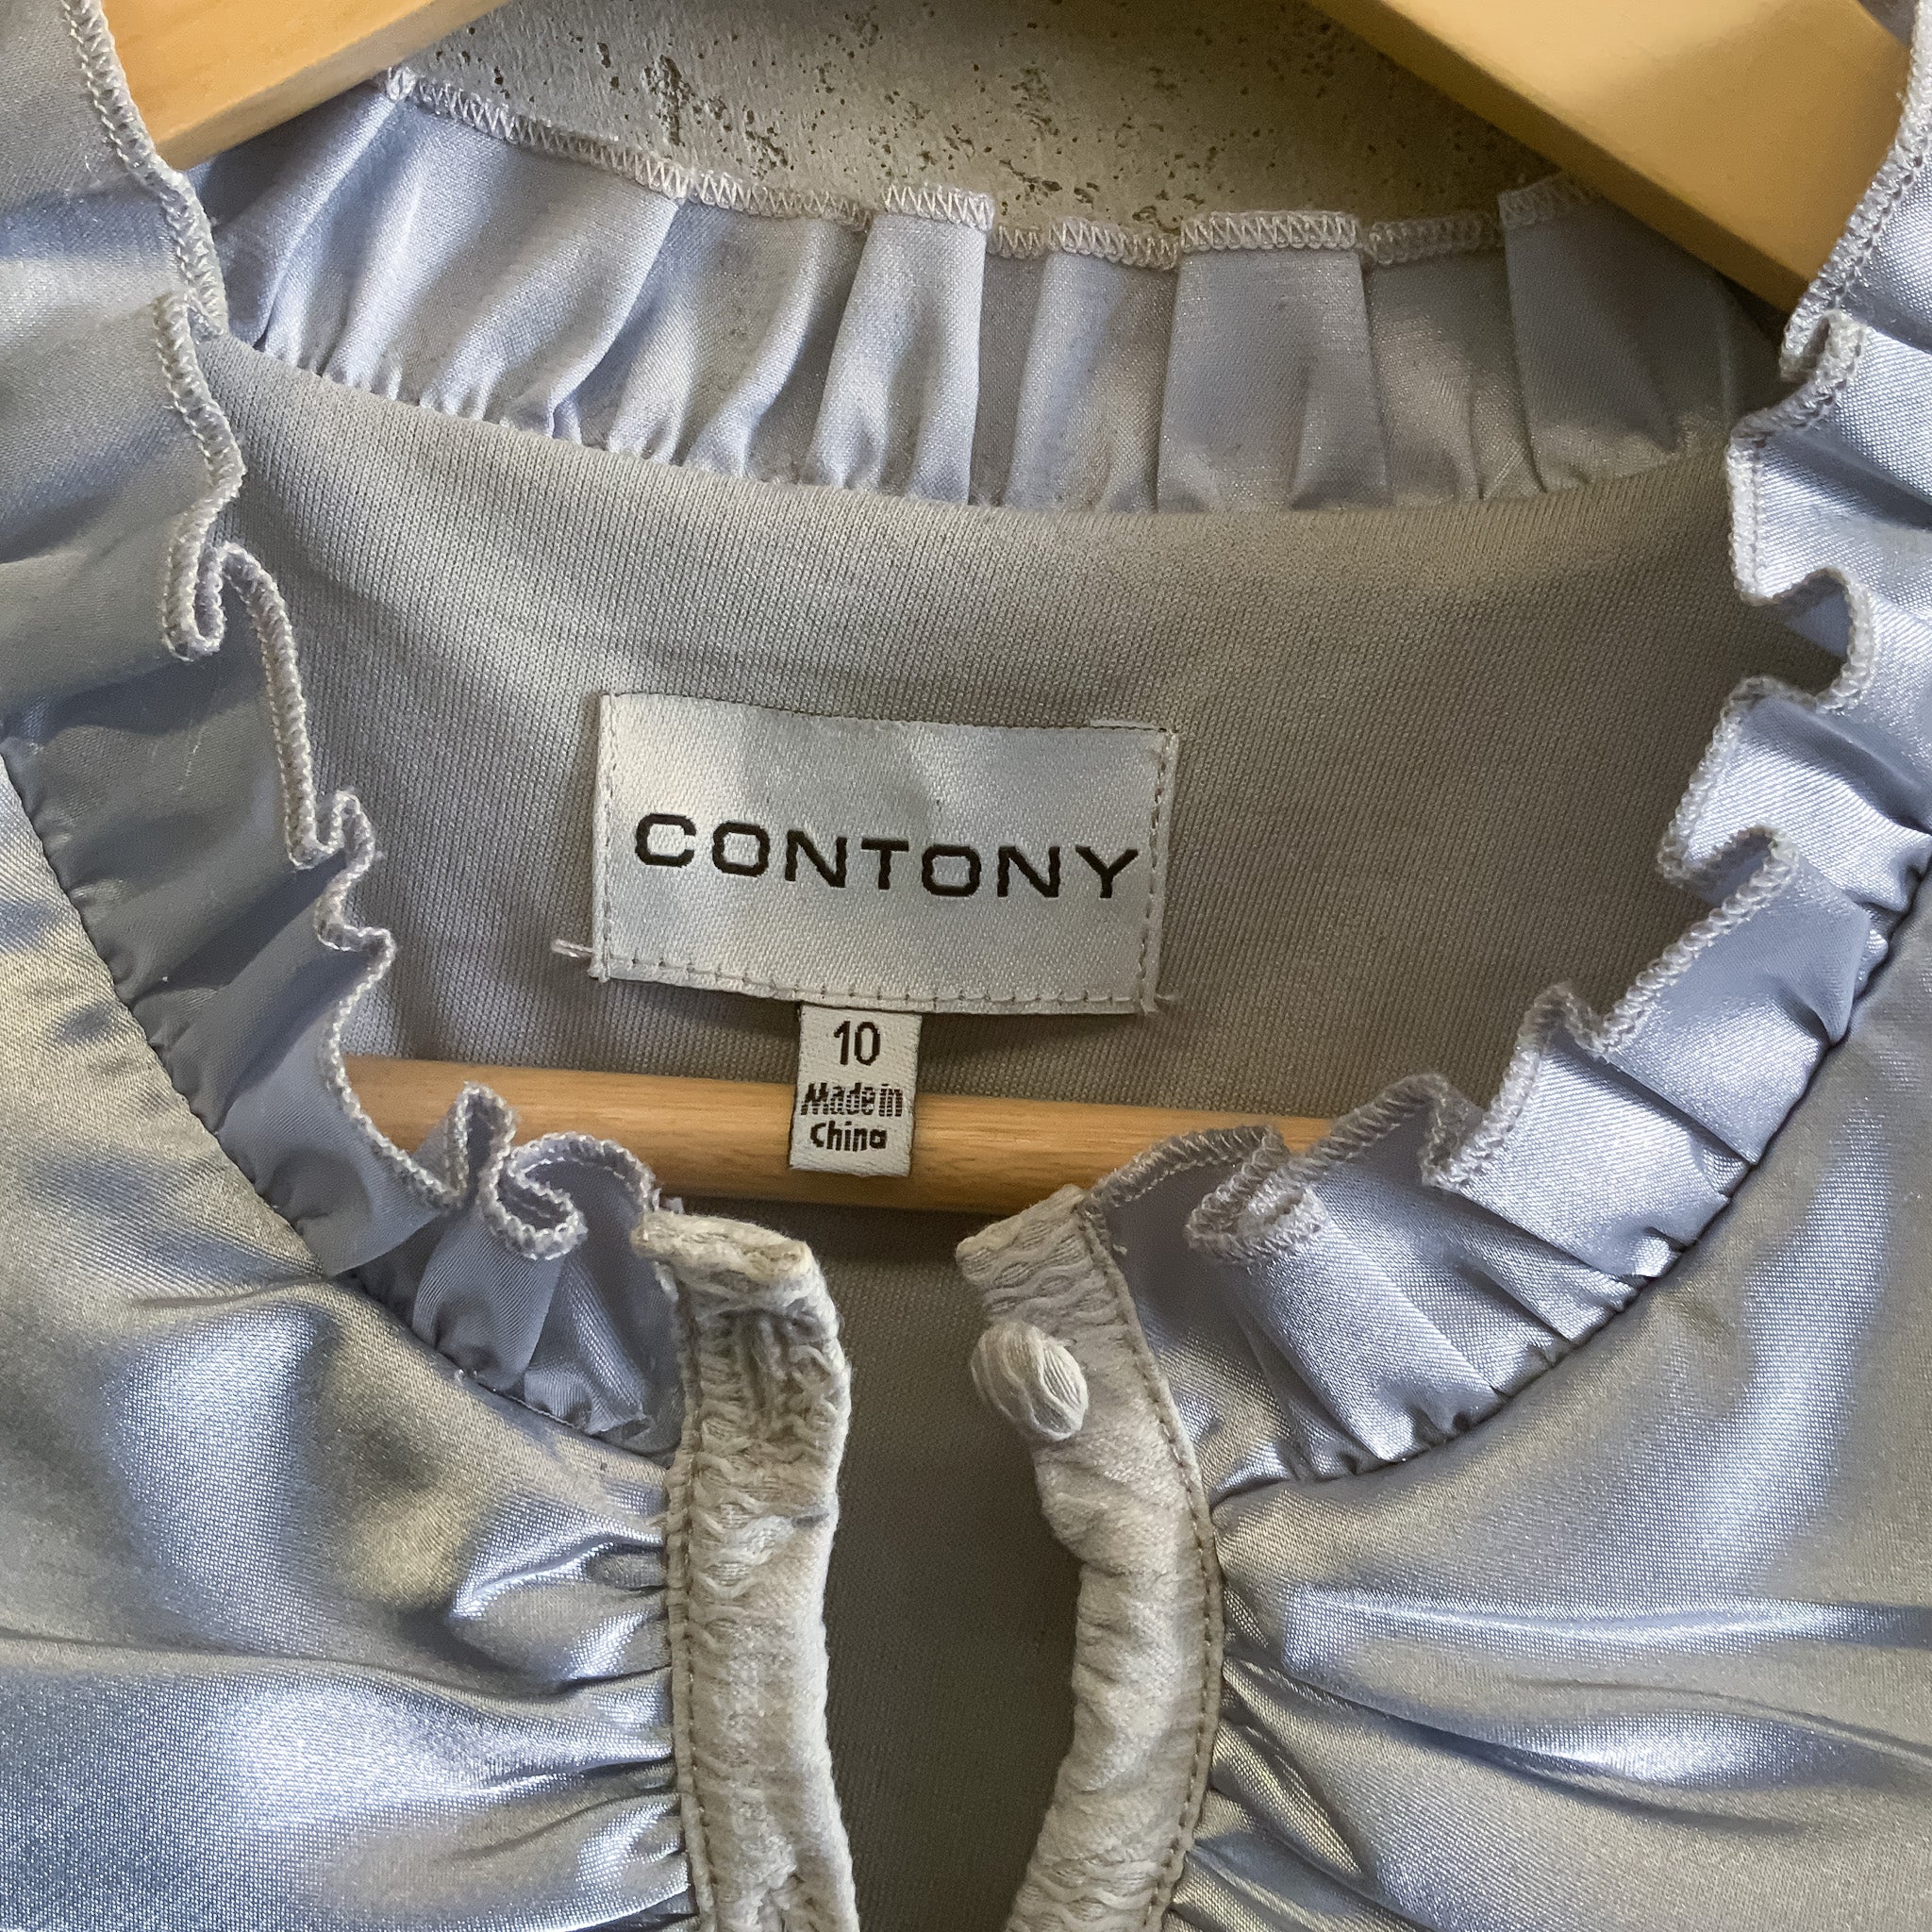 COTONY Sleeveless Silver High Neck Brocade Party/Evening Dress - Size 10